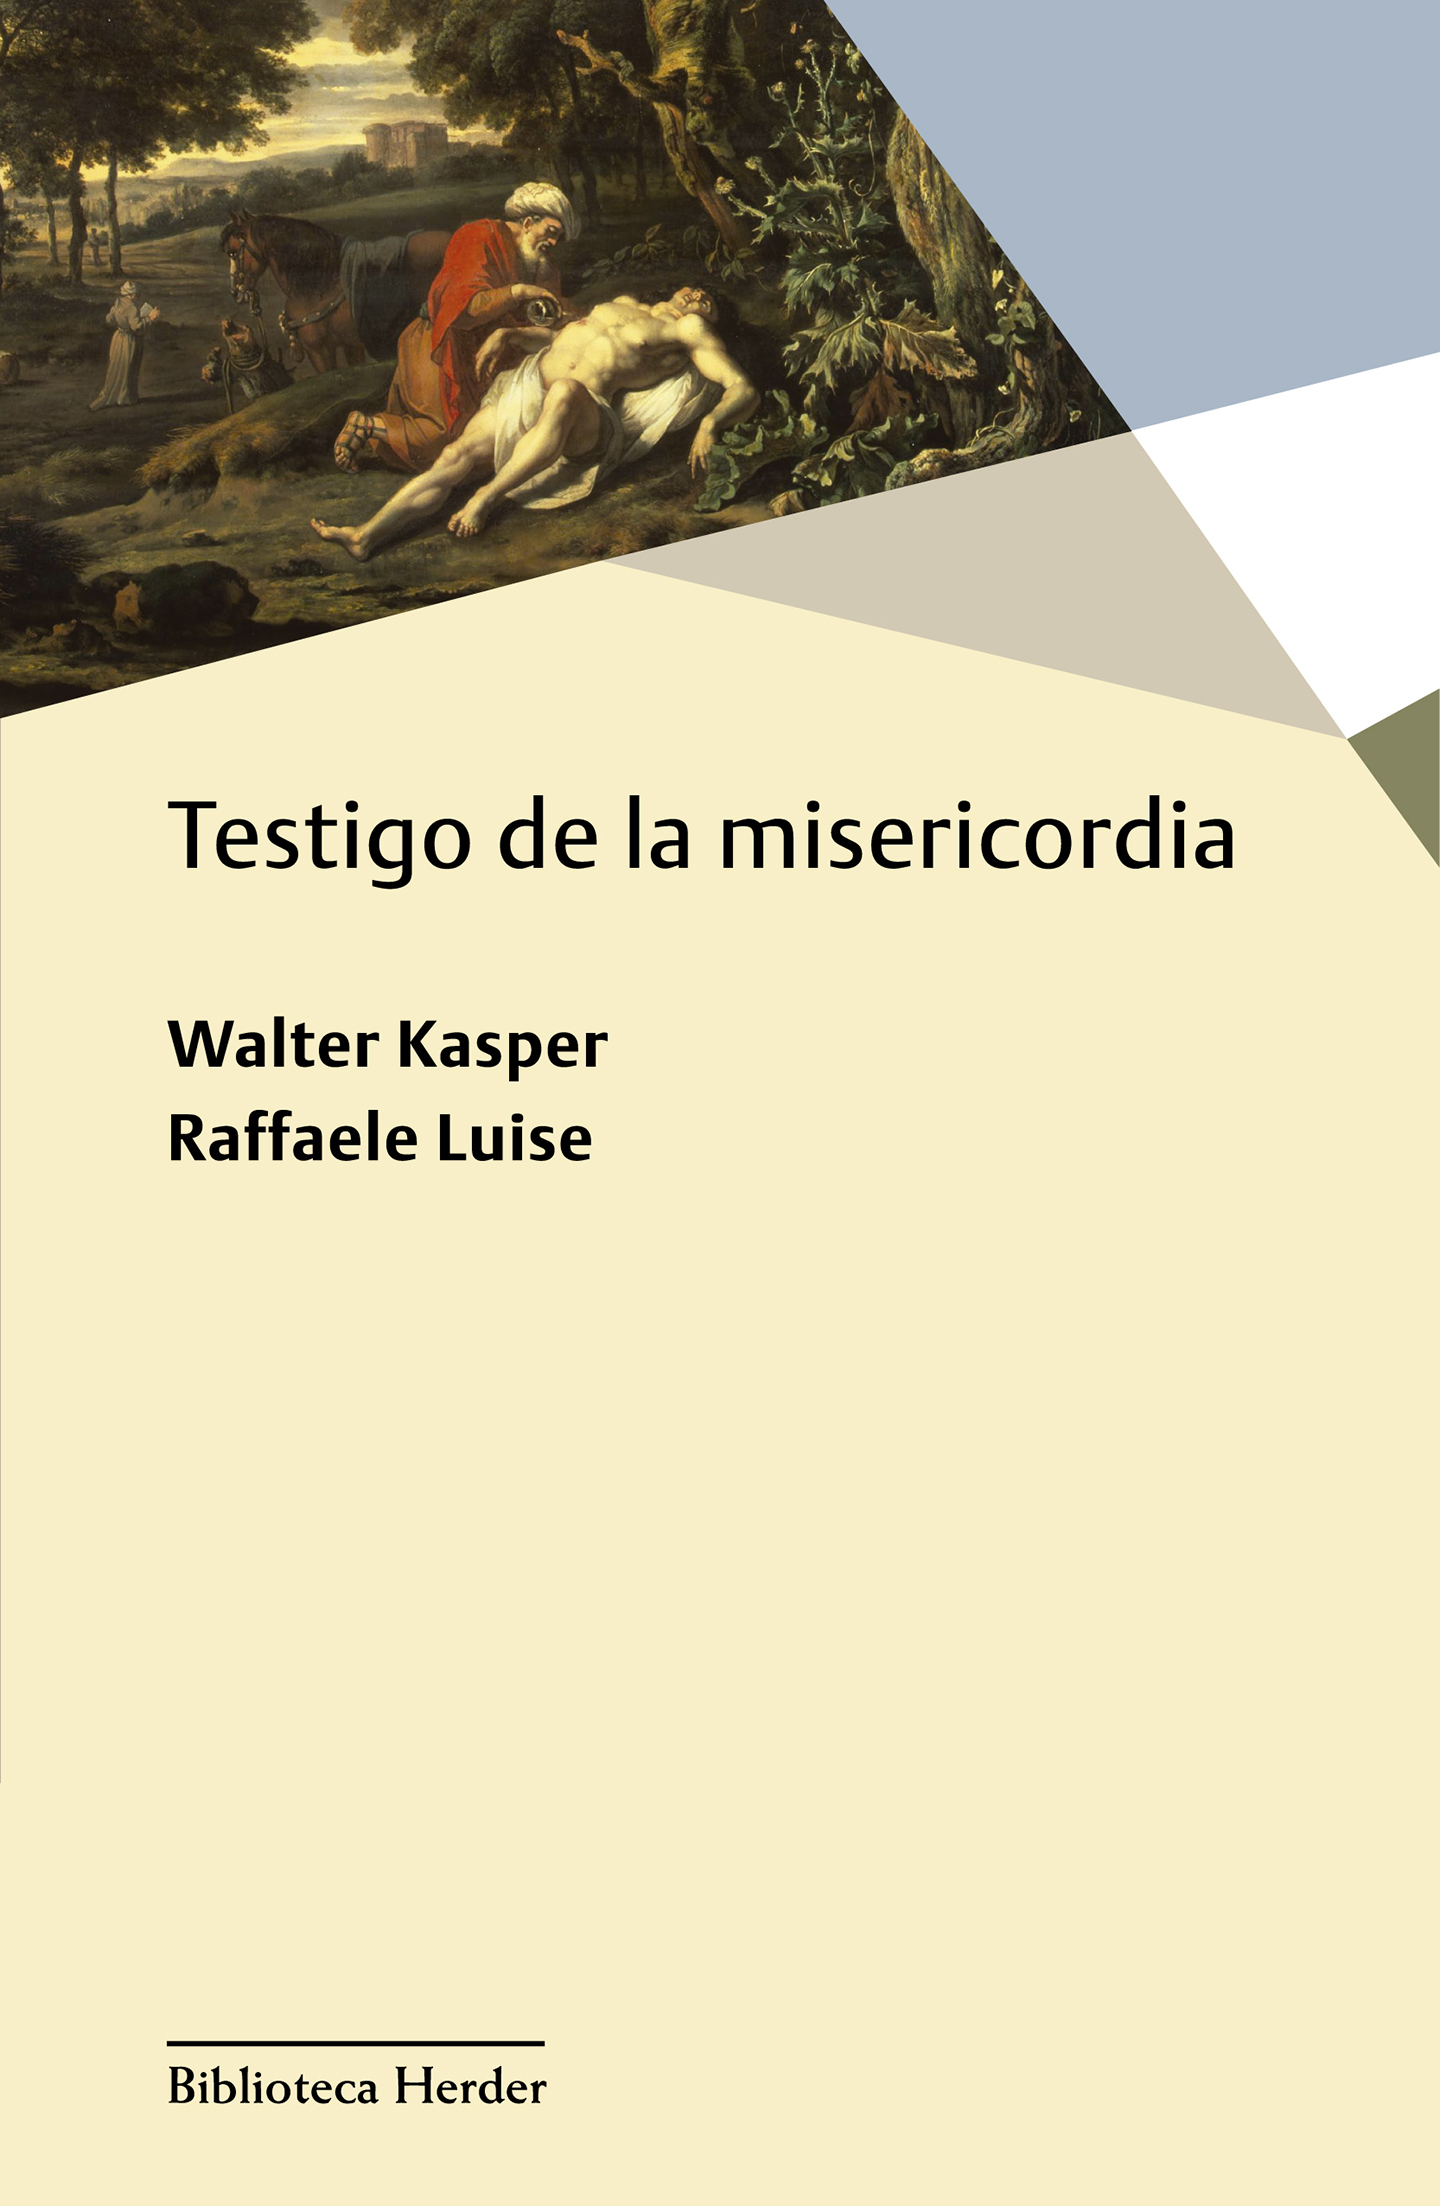 WALTER KASPER TESTIGO DE LA MISERICORDIA MI VIAJE CON FRANCISCO Conversaciones - photo 1